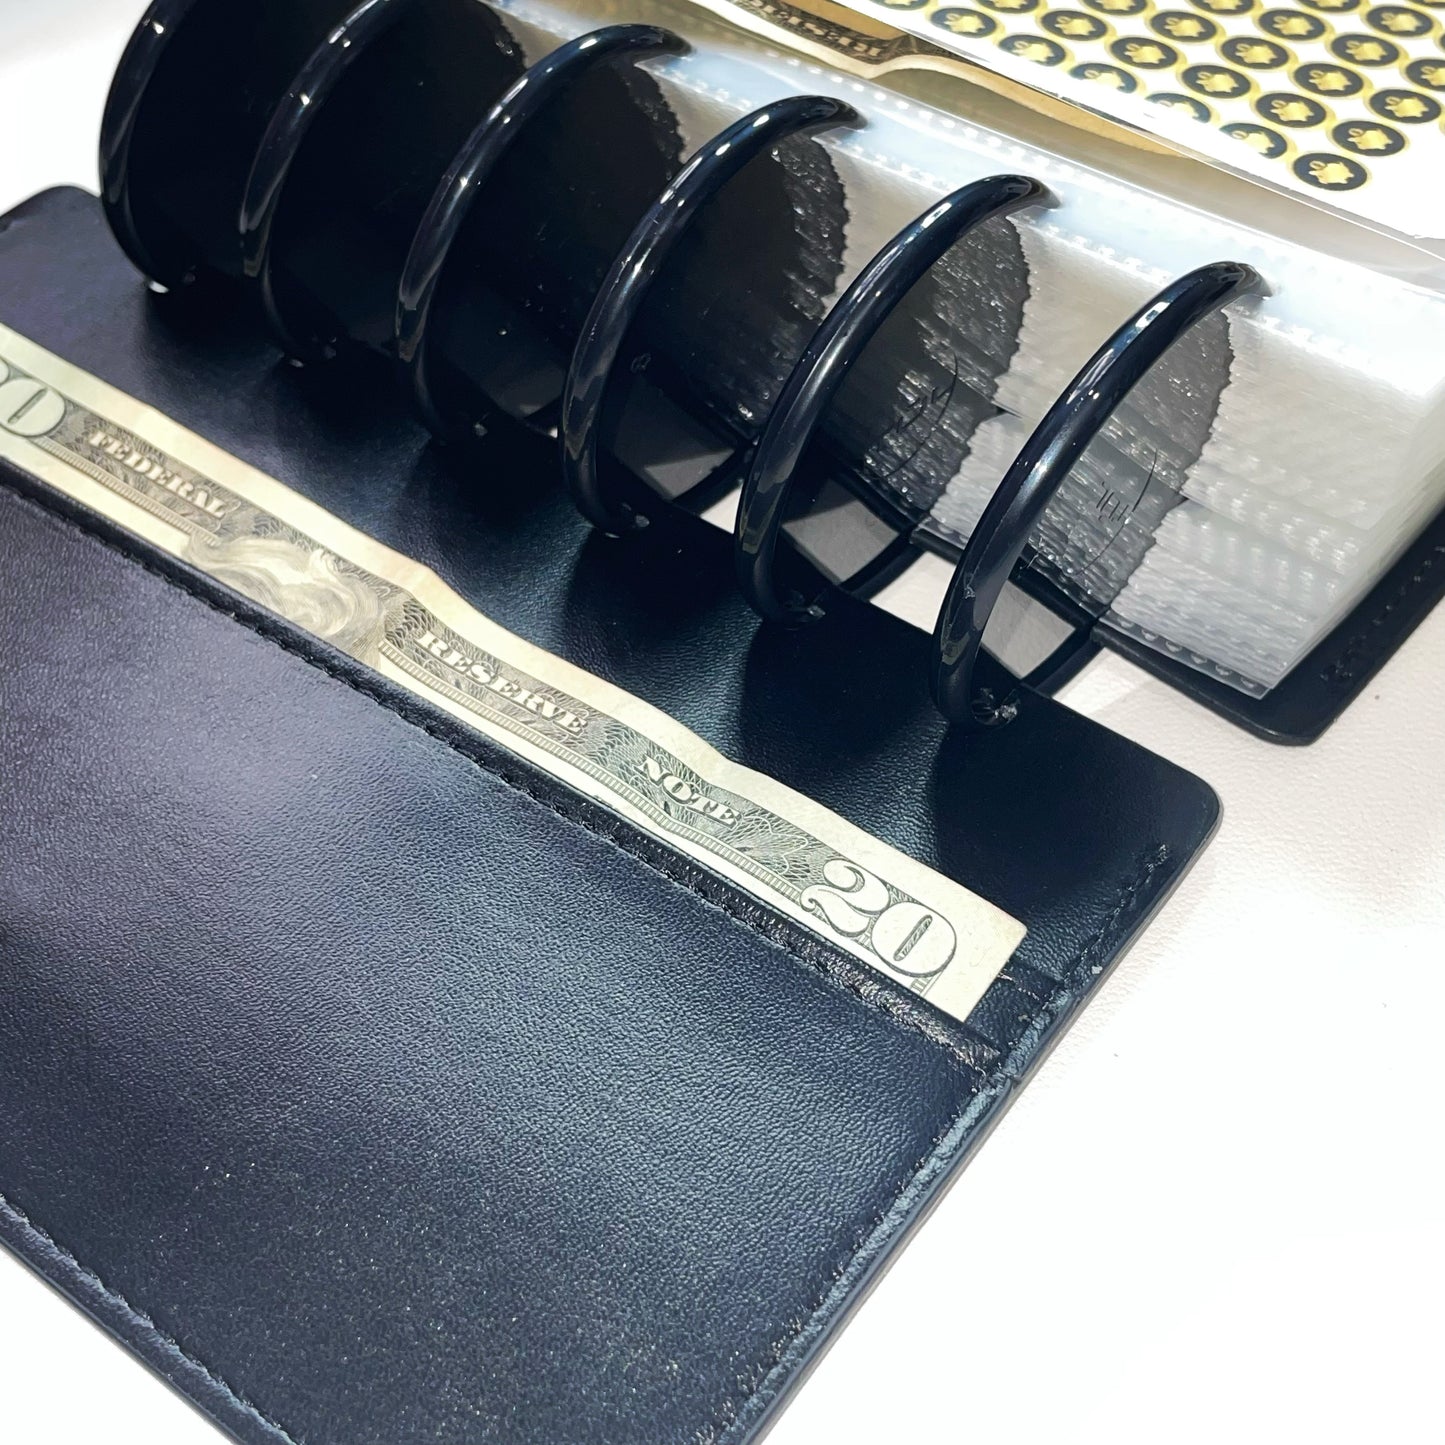 100 Cash Envelopes Smooth Black Leather Discbound Accessory Organizer System